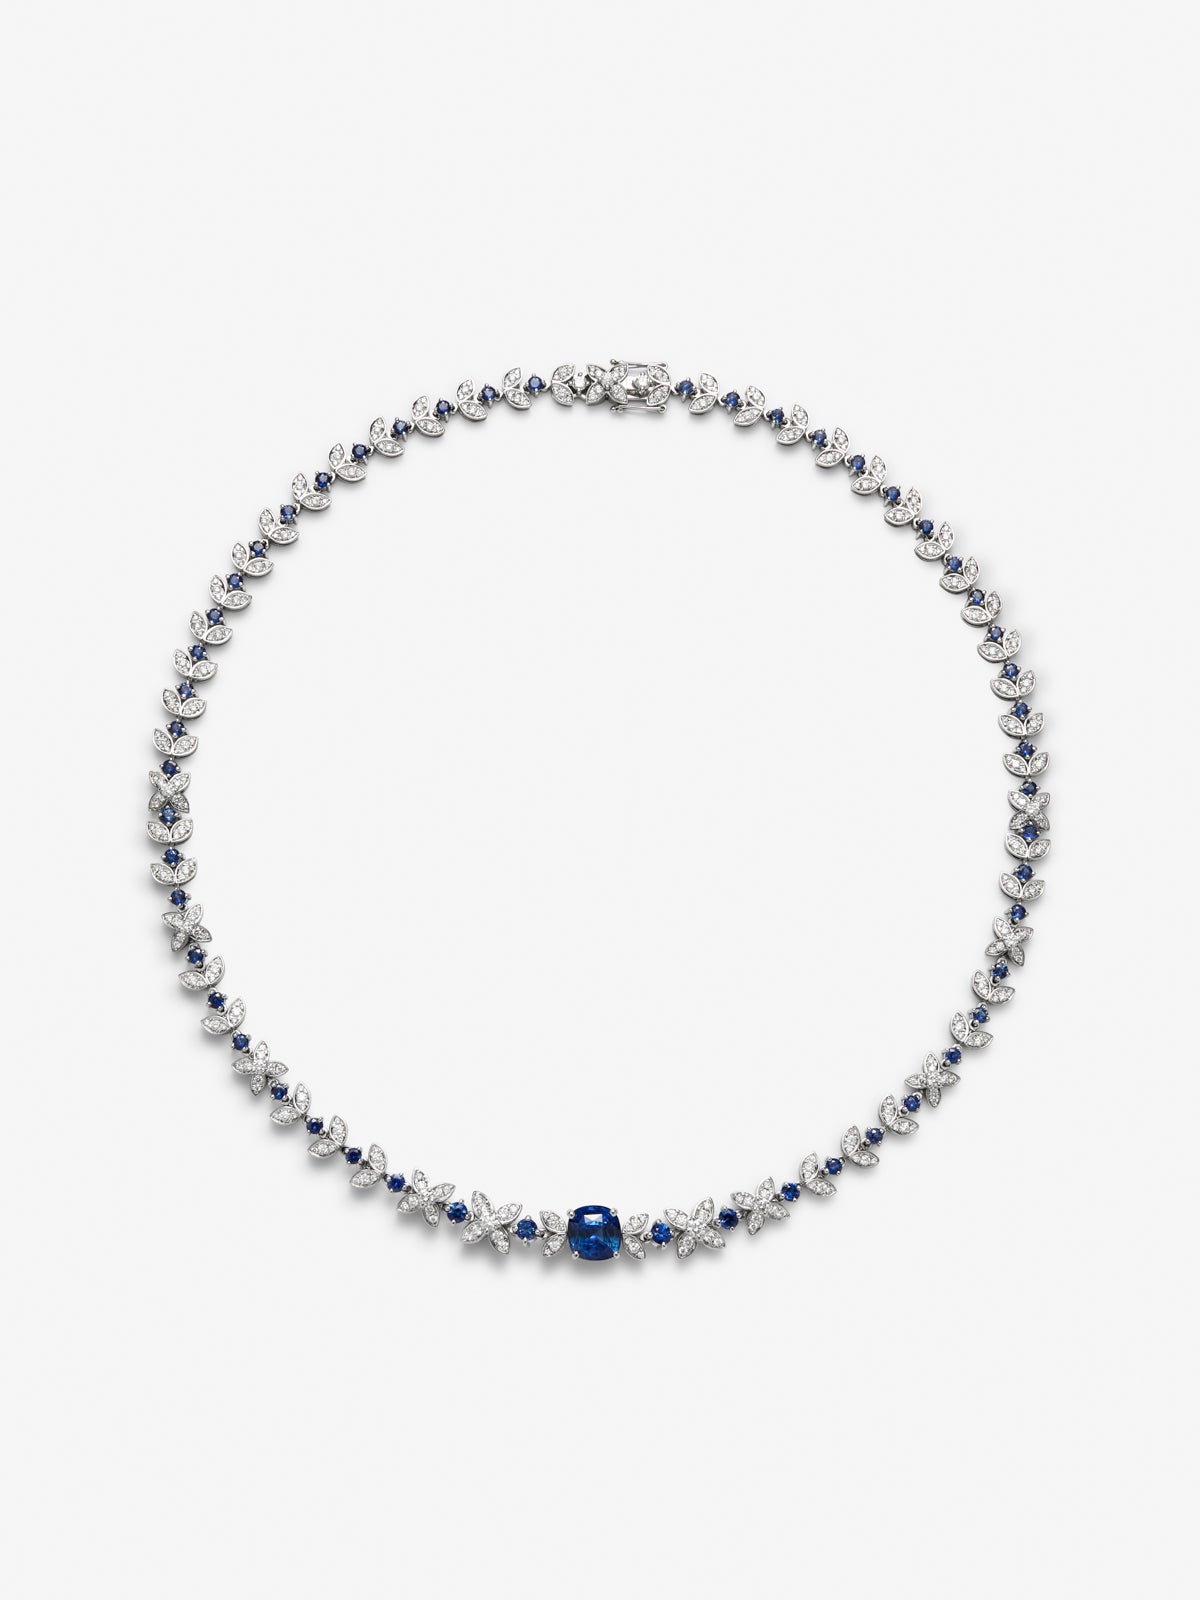 18K white gold necklace with 3.51 ct cushion-cut cornflower blue sapphire, 4.32 ct brilliant-cut blue sapphires and 3.58 ct brilliant-cut diamonds